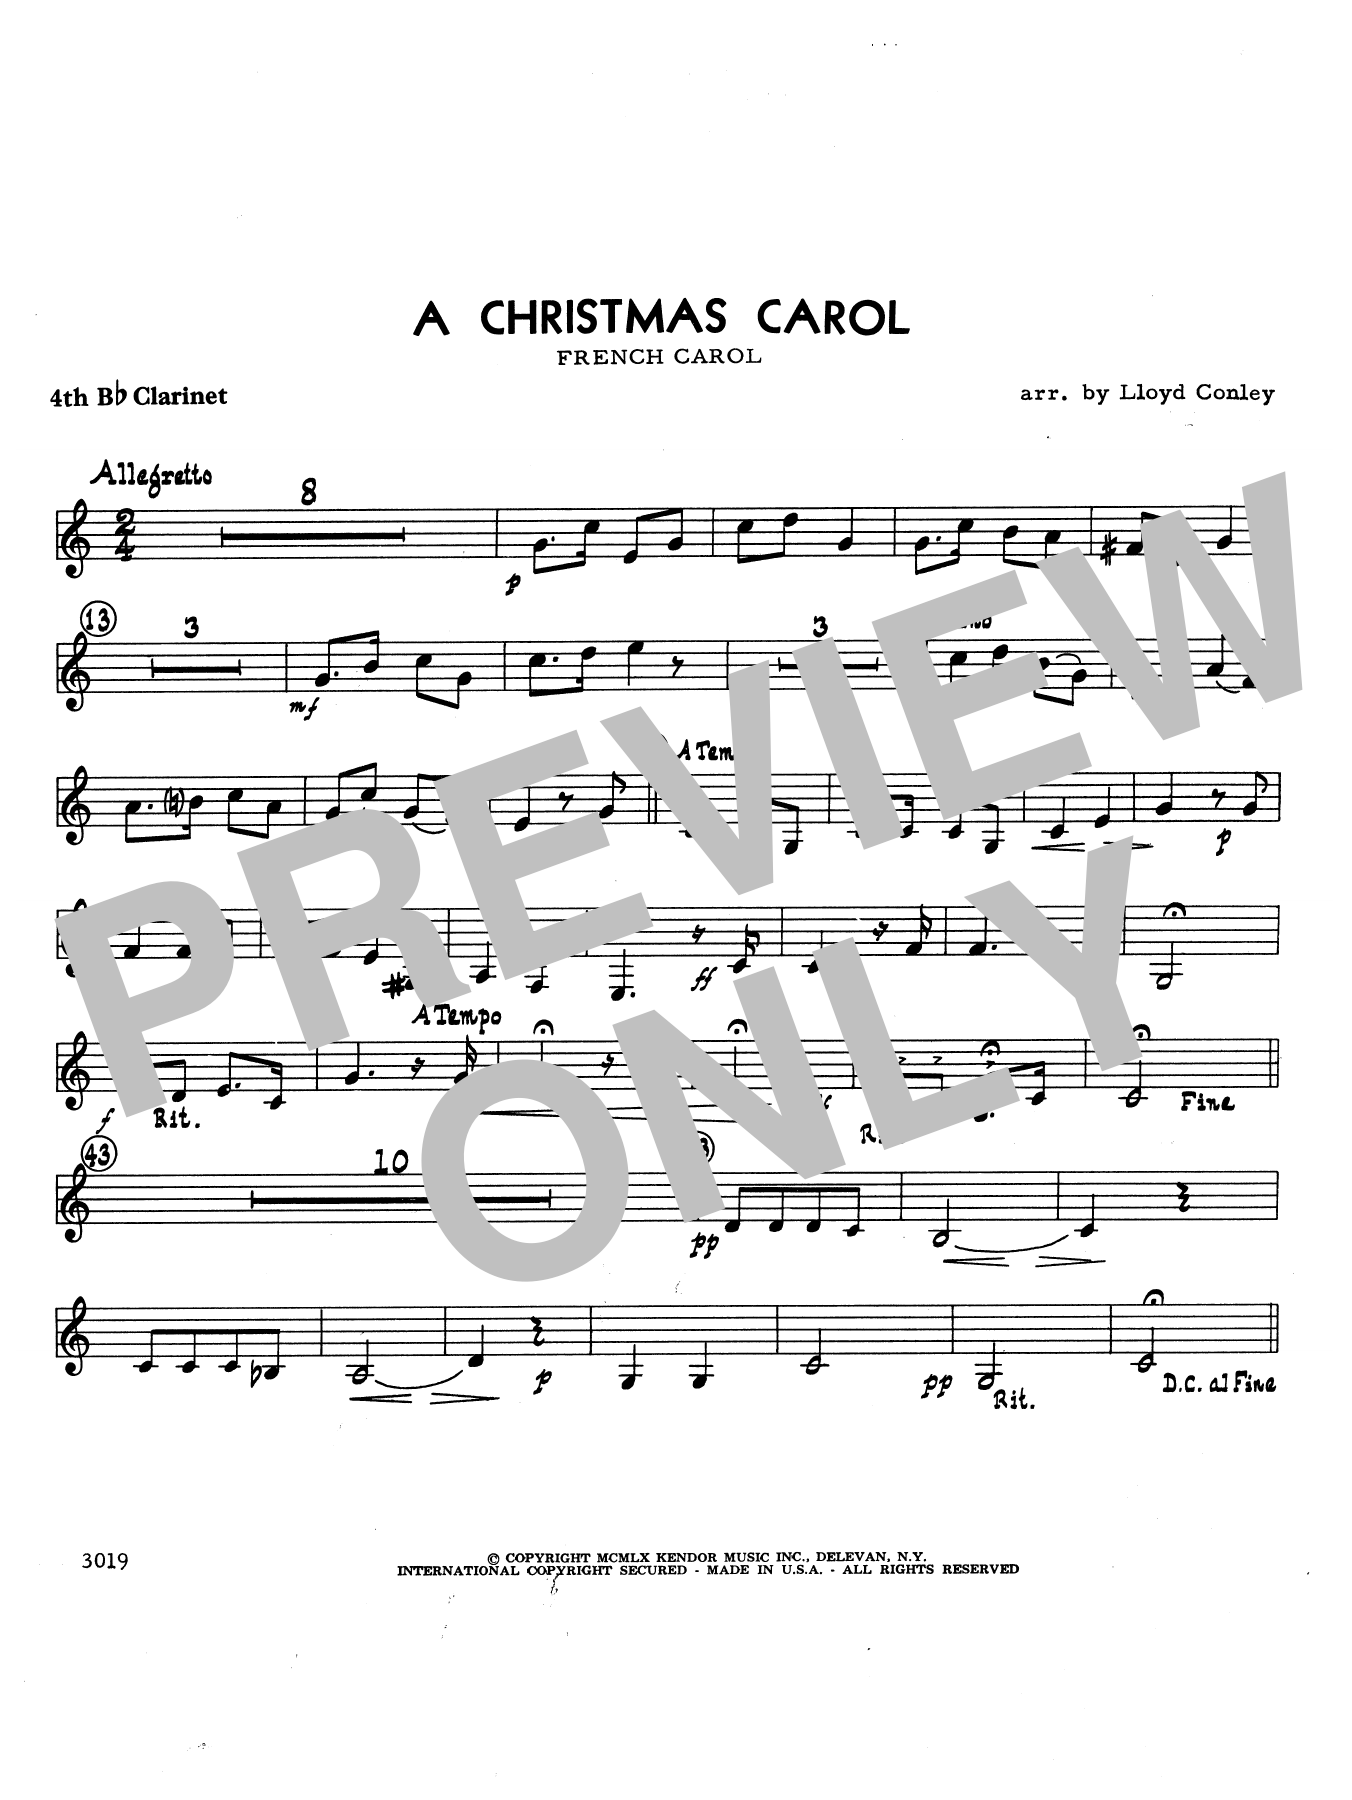 Download Lloyd Conley A Christmas Carol - 4th Bb Clarinet Sheet Music